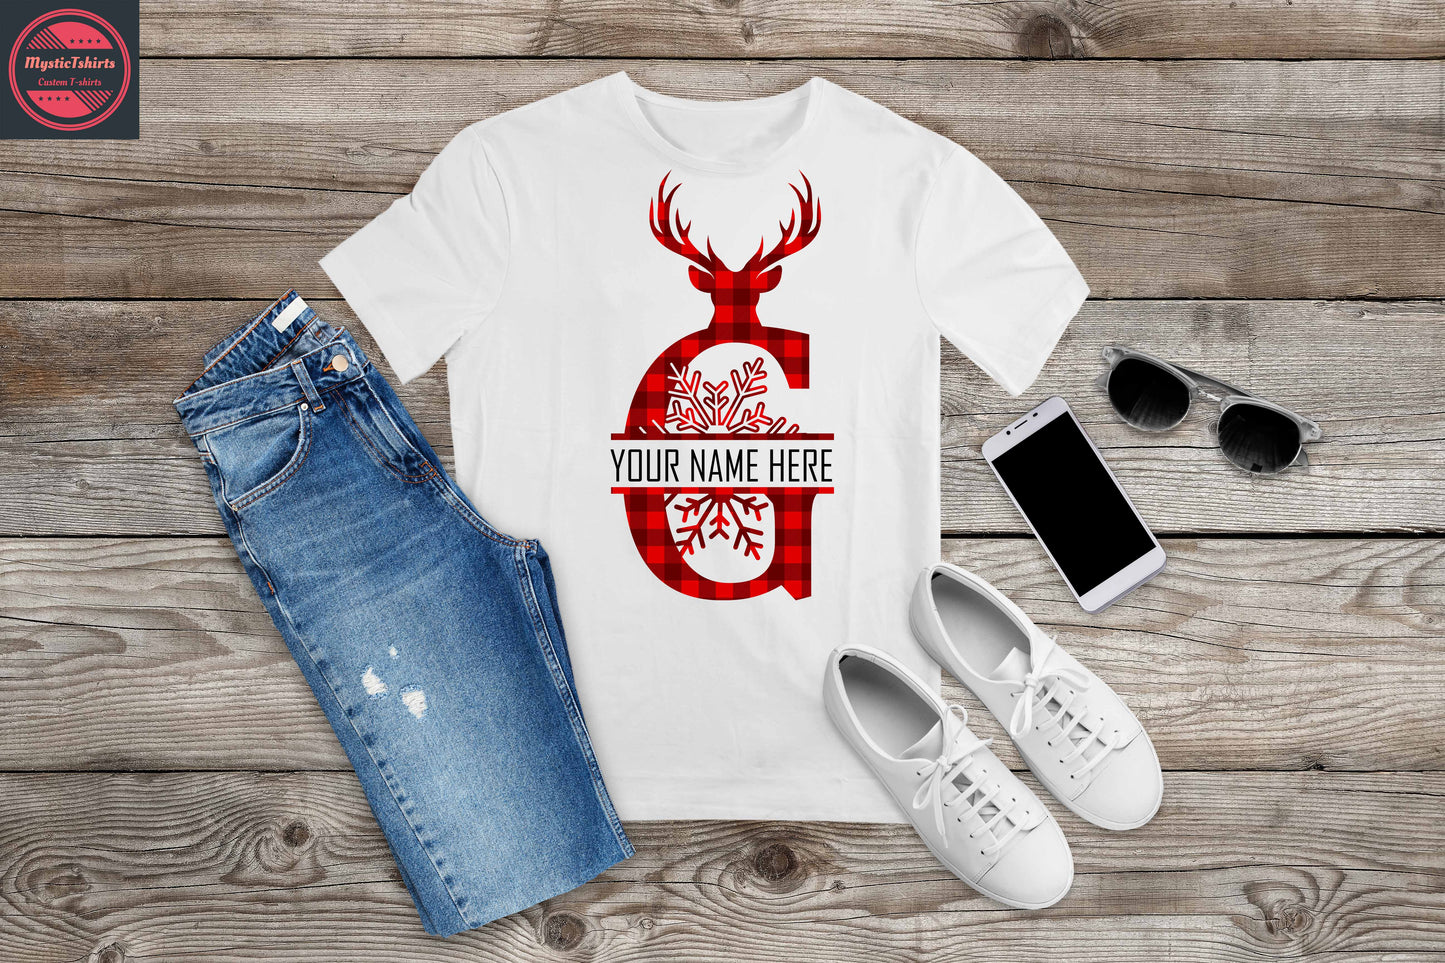 353. MONOGRAMMED RED REINDEER CHRISTMAS G, Custom Made Shirt, Personalized T-Shirt, Custom Text, Make Your Own Shirt, Custom Tee